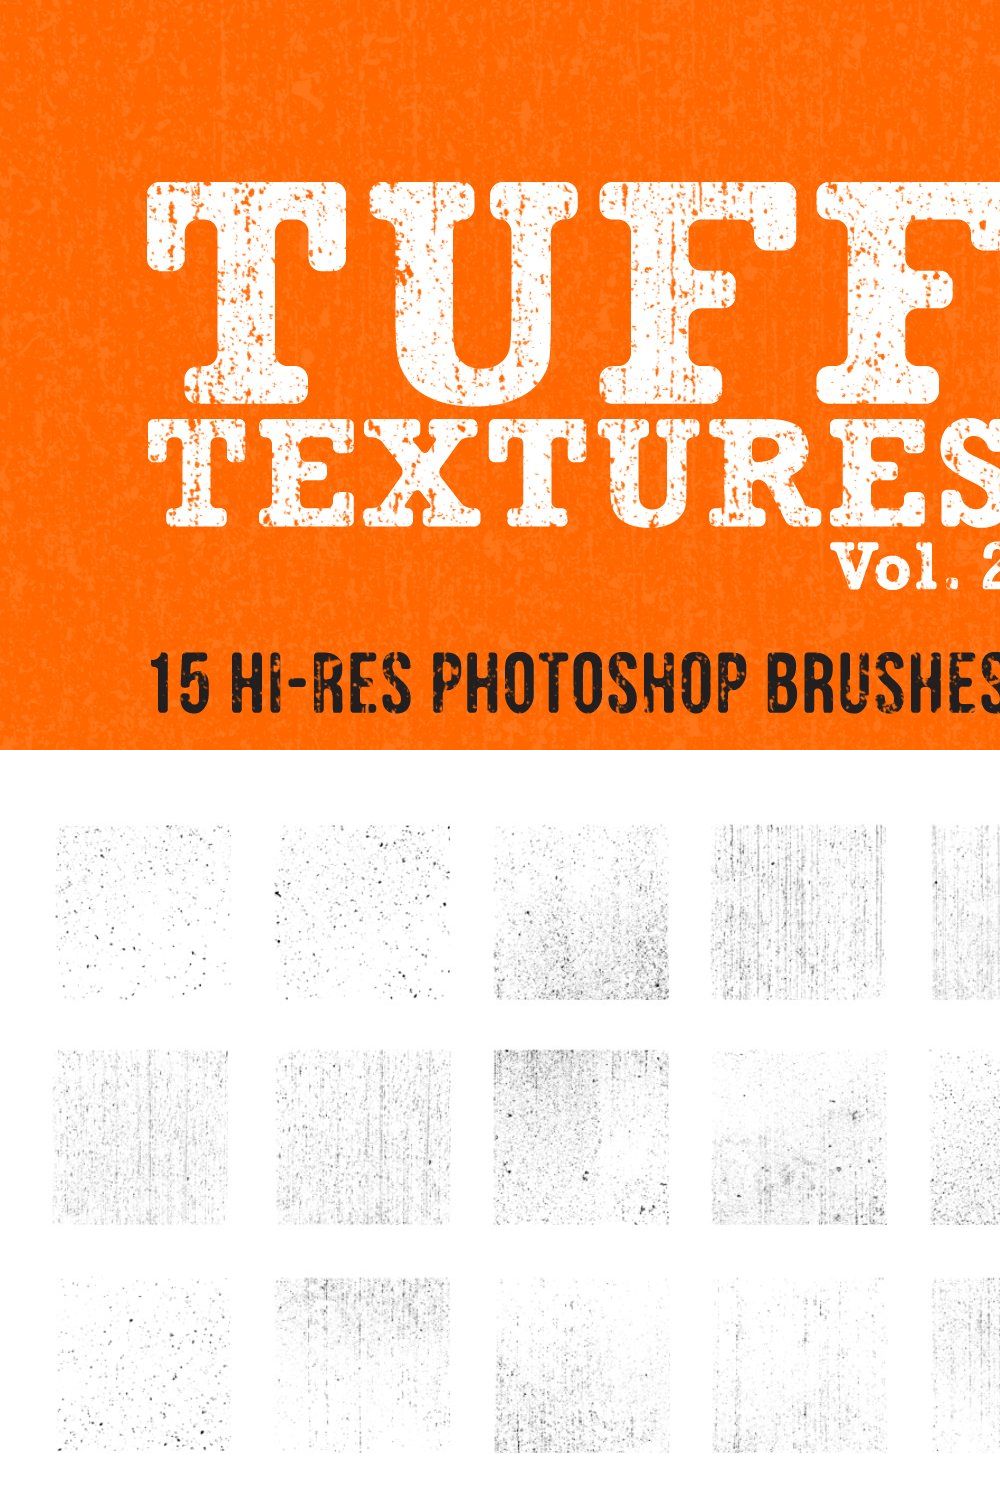 Tuff Textures Vol. 2 pinterest preview image.